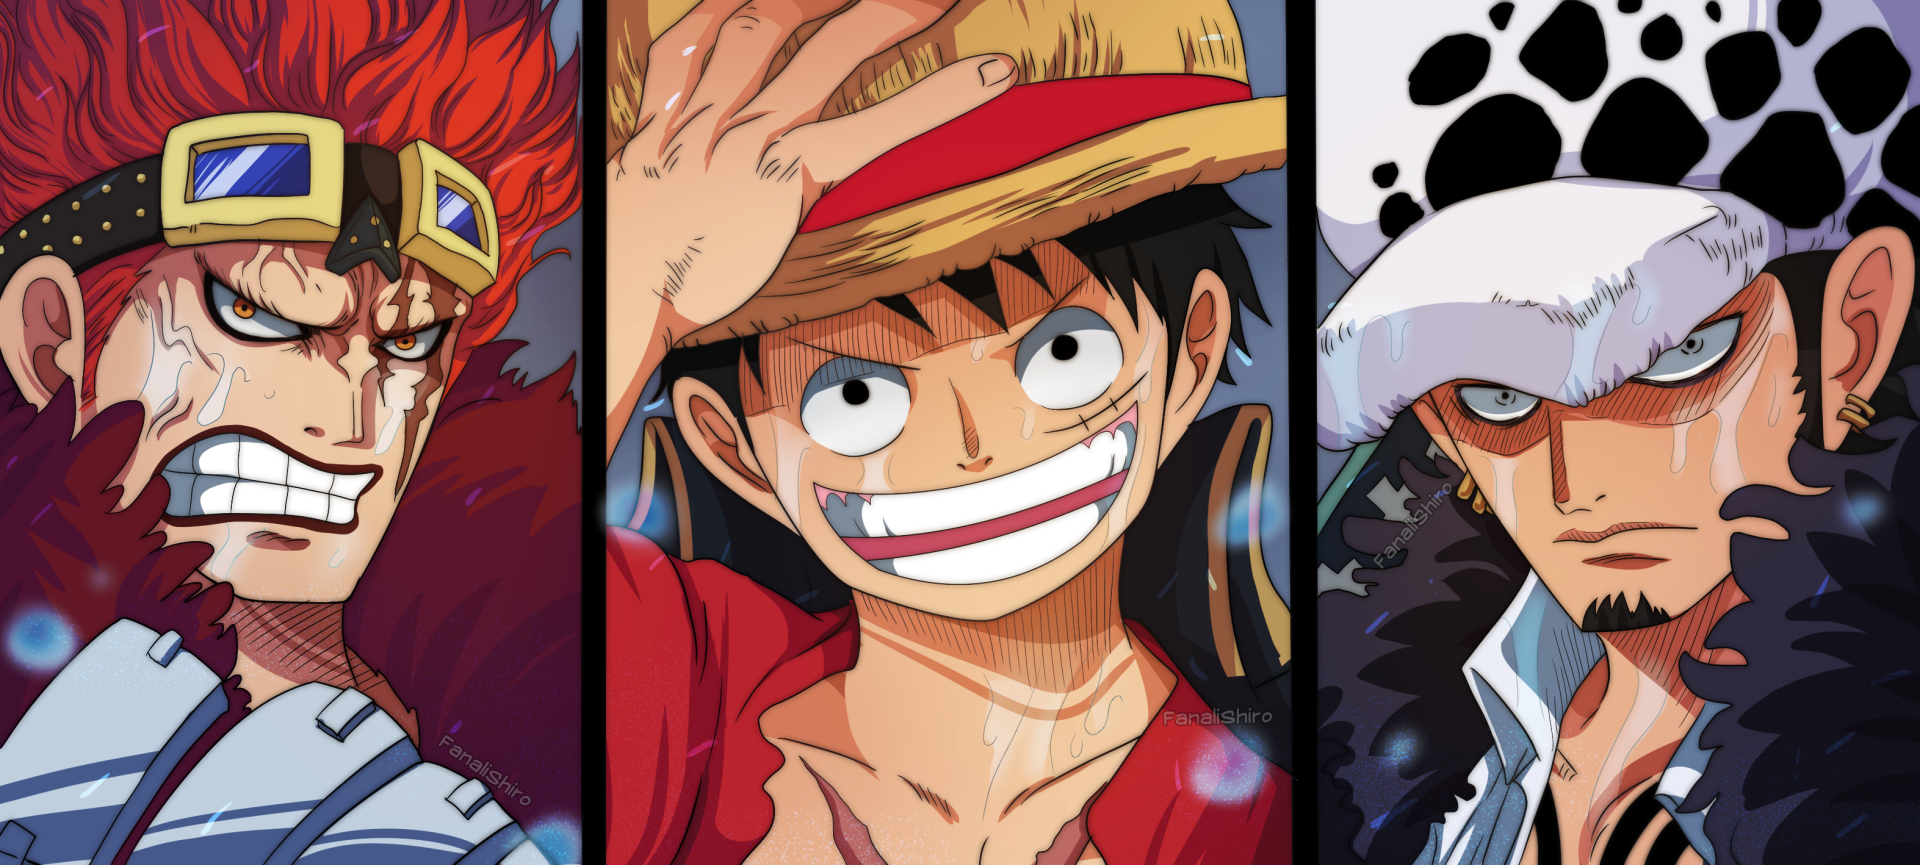 Anime One Piece HD Wallpaper by FanaliShiro